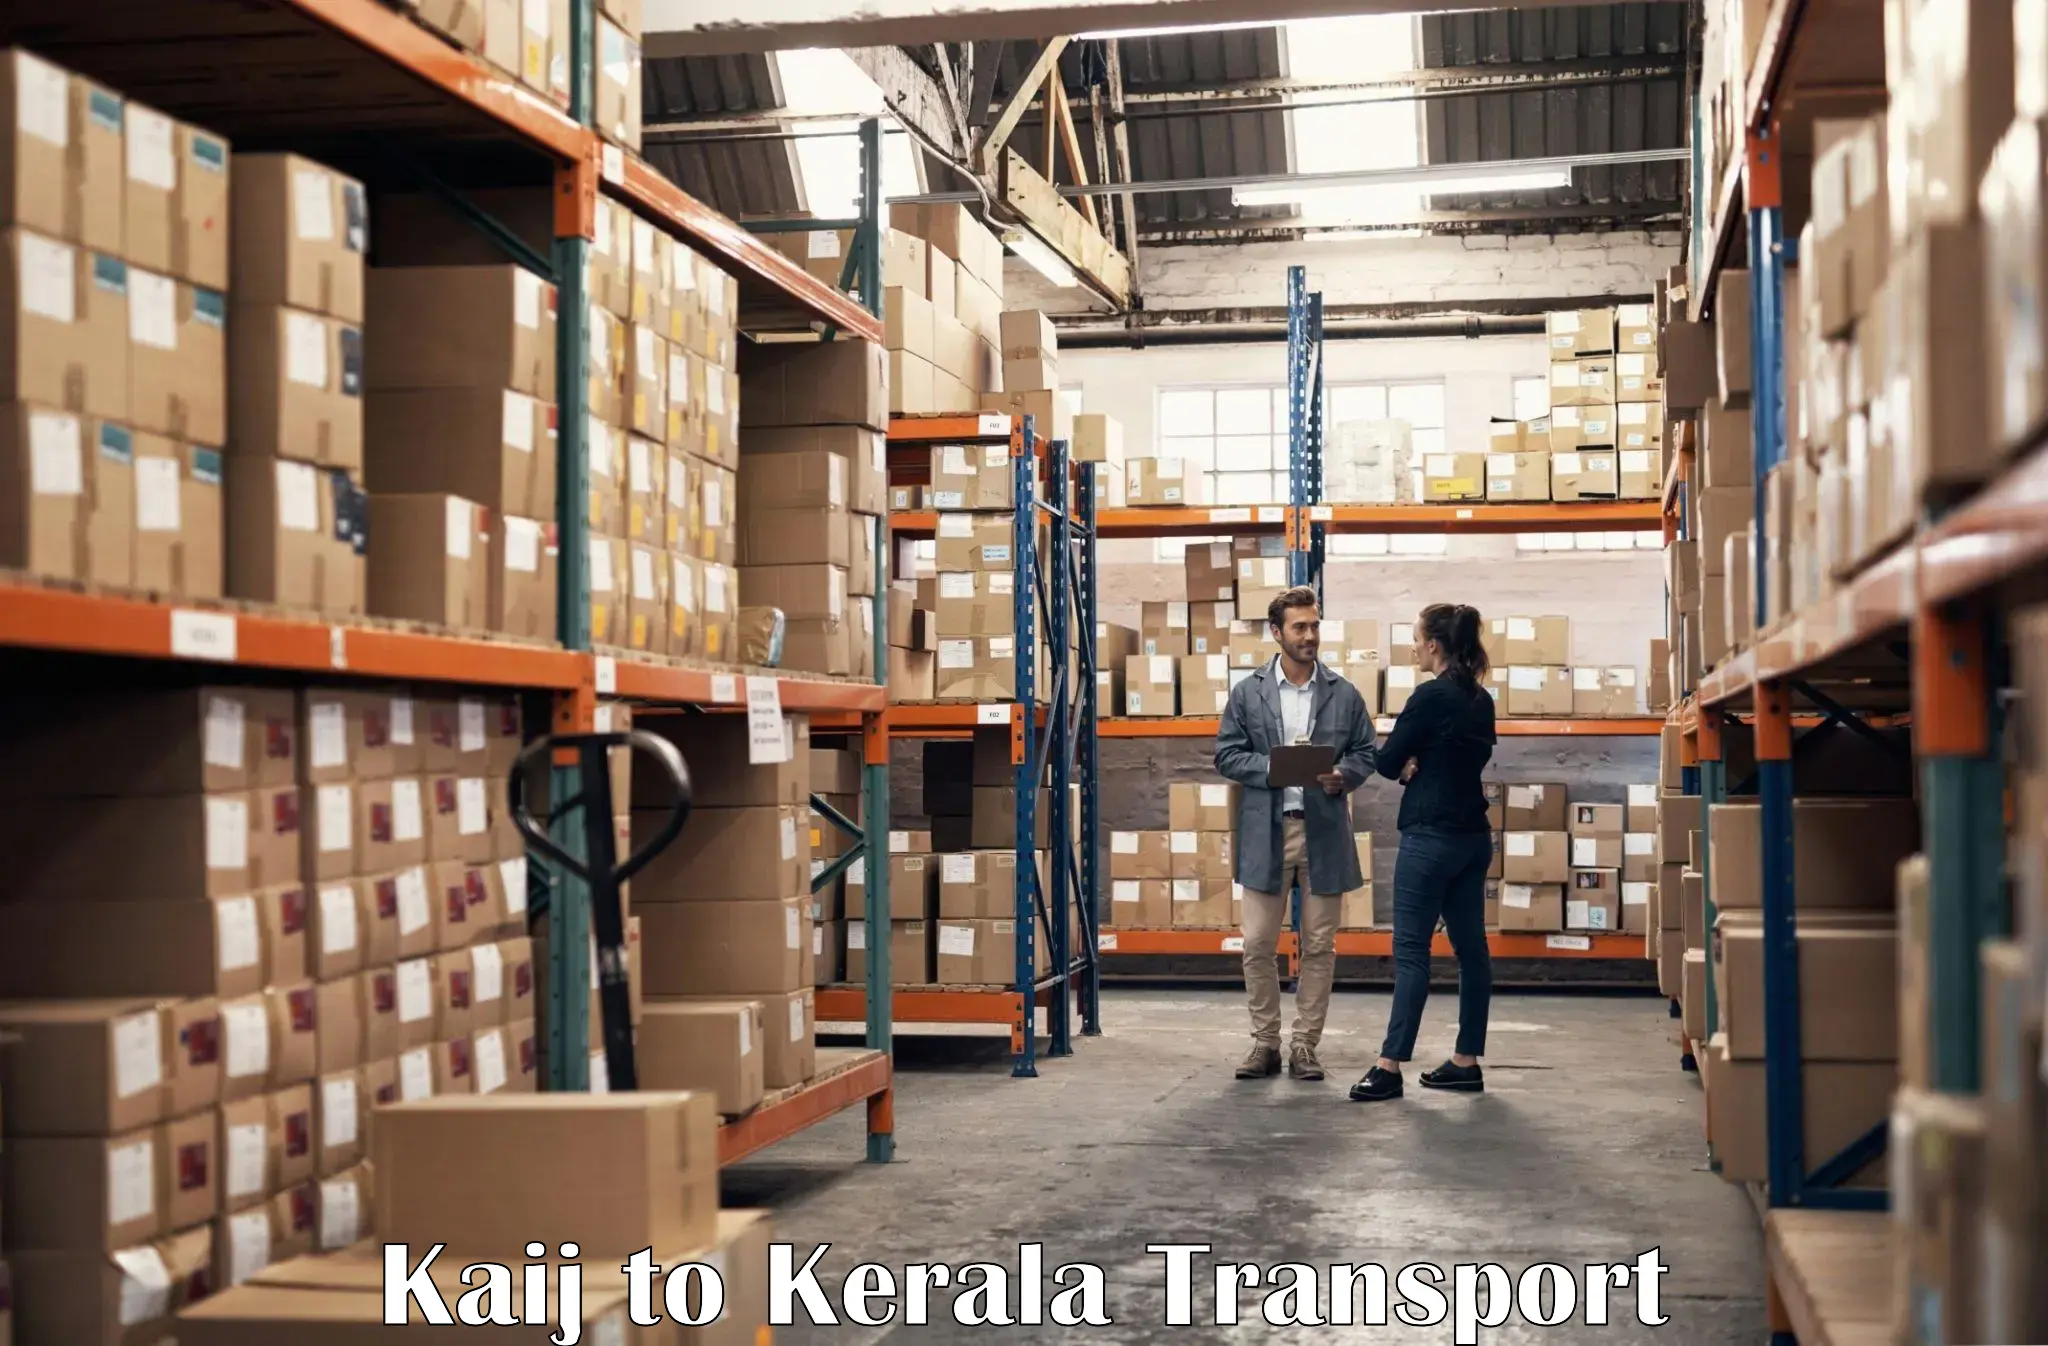 Delivery service Kaij to Kerala